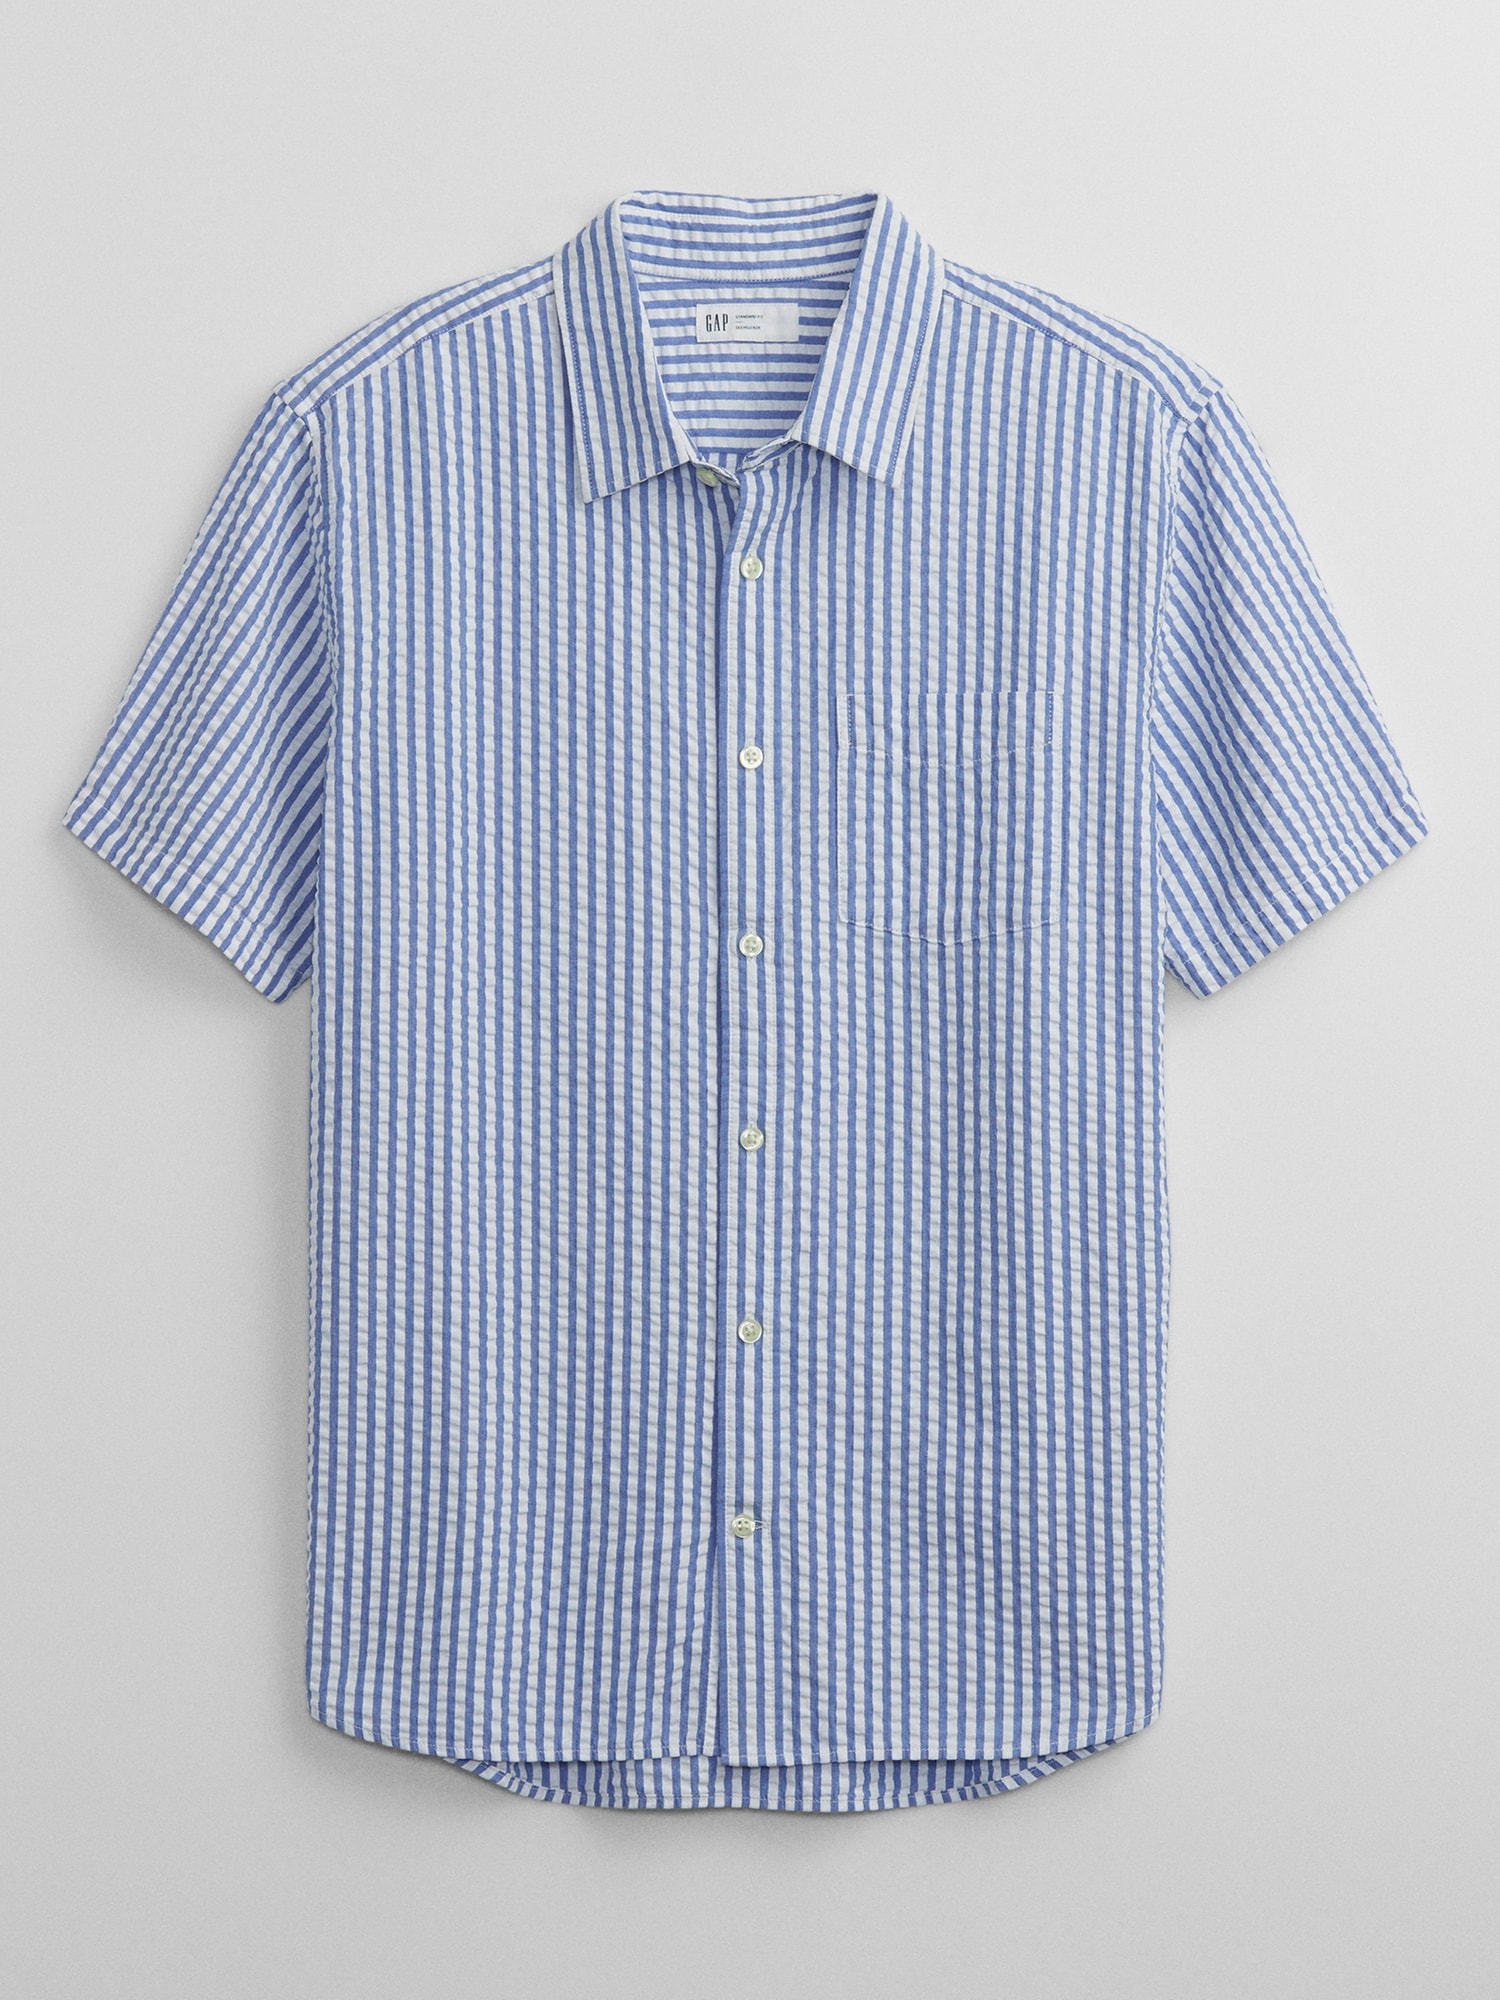 Seersucker Shirt in Standard Fit | Gap Factory